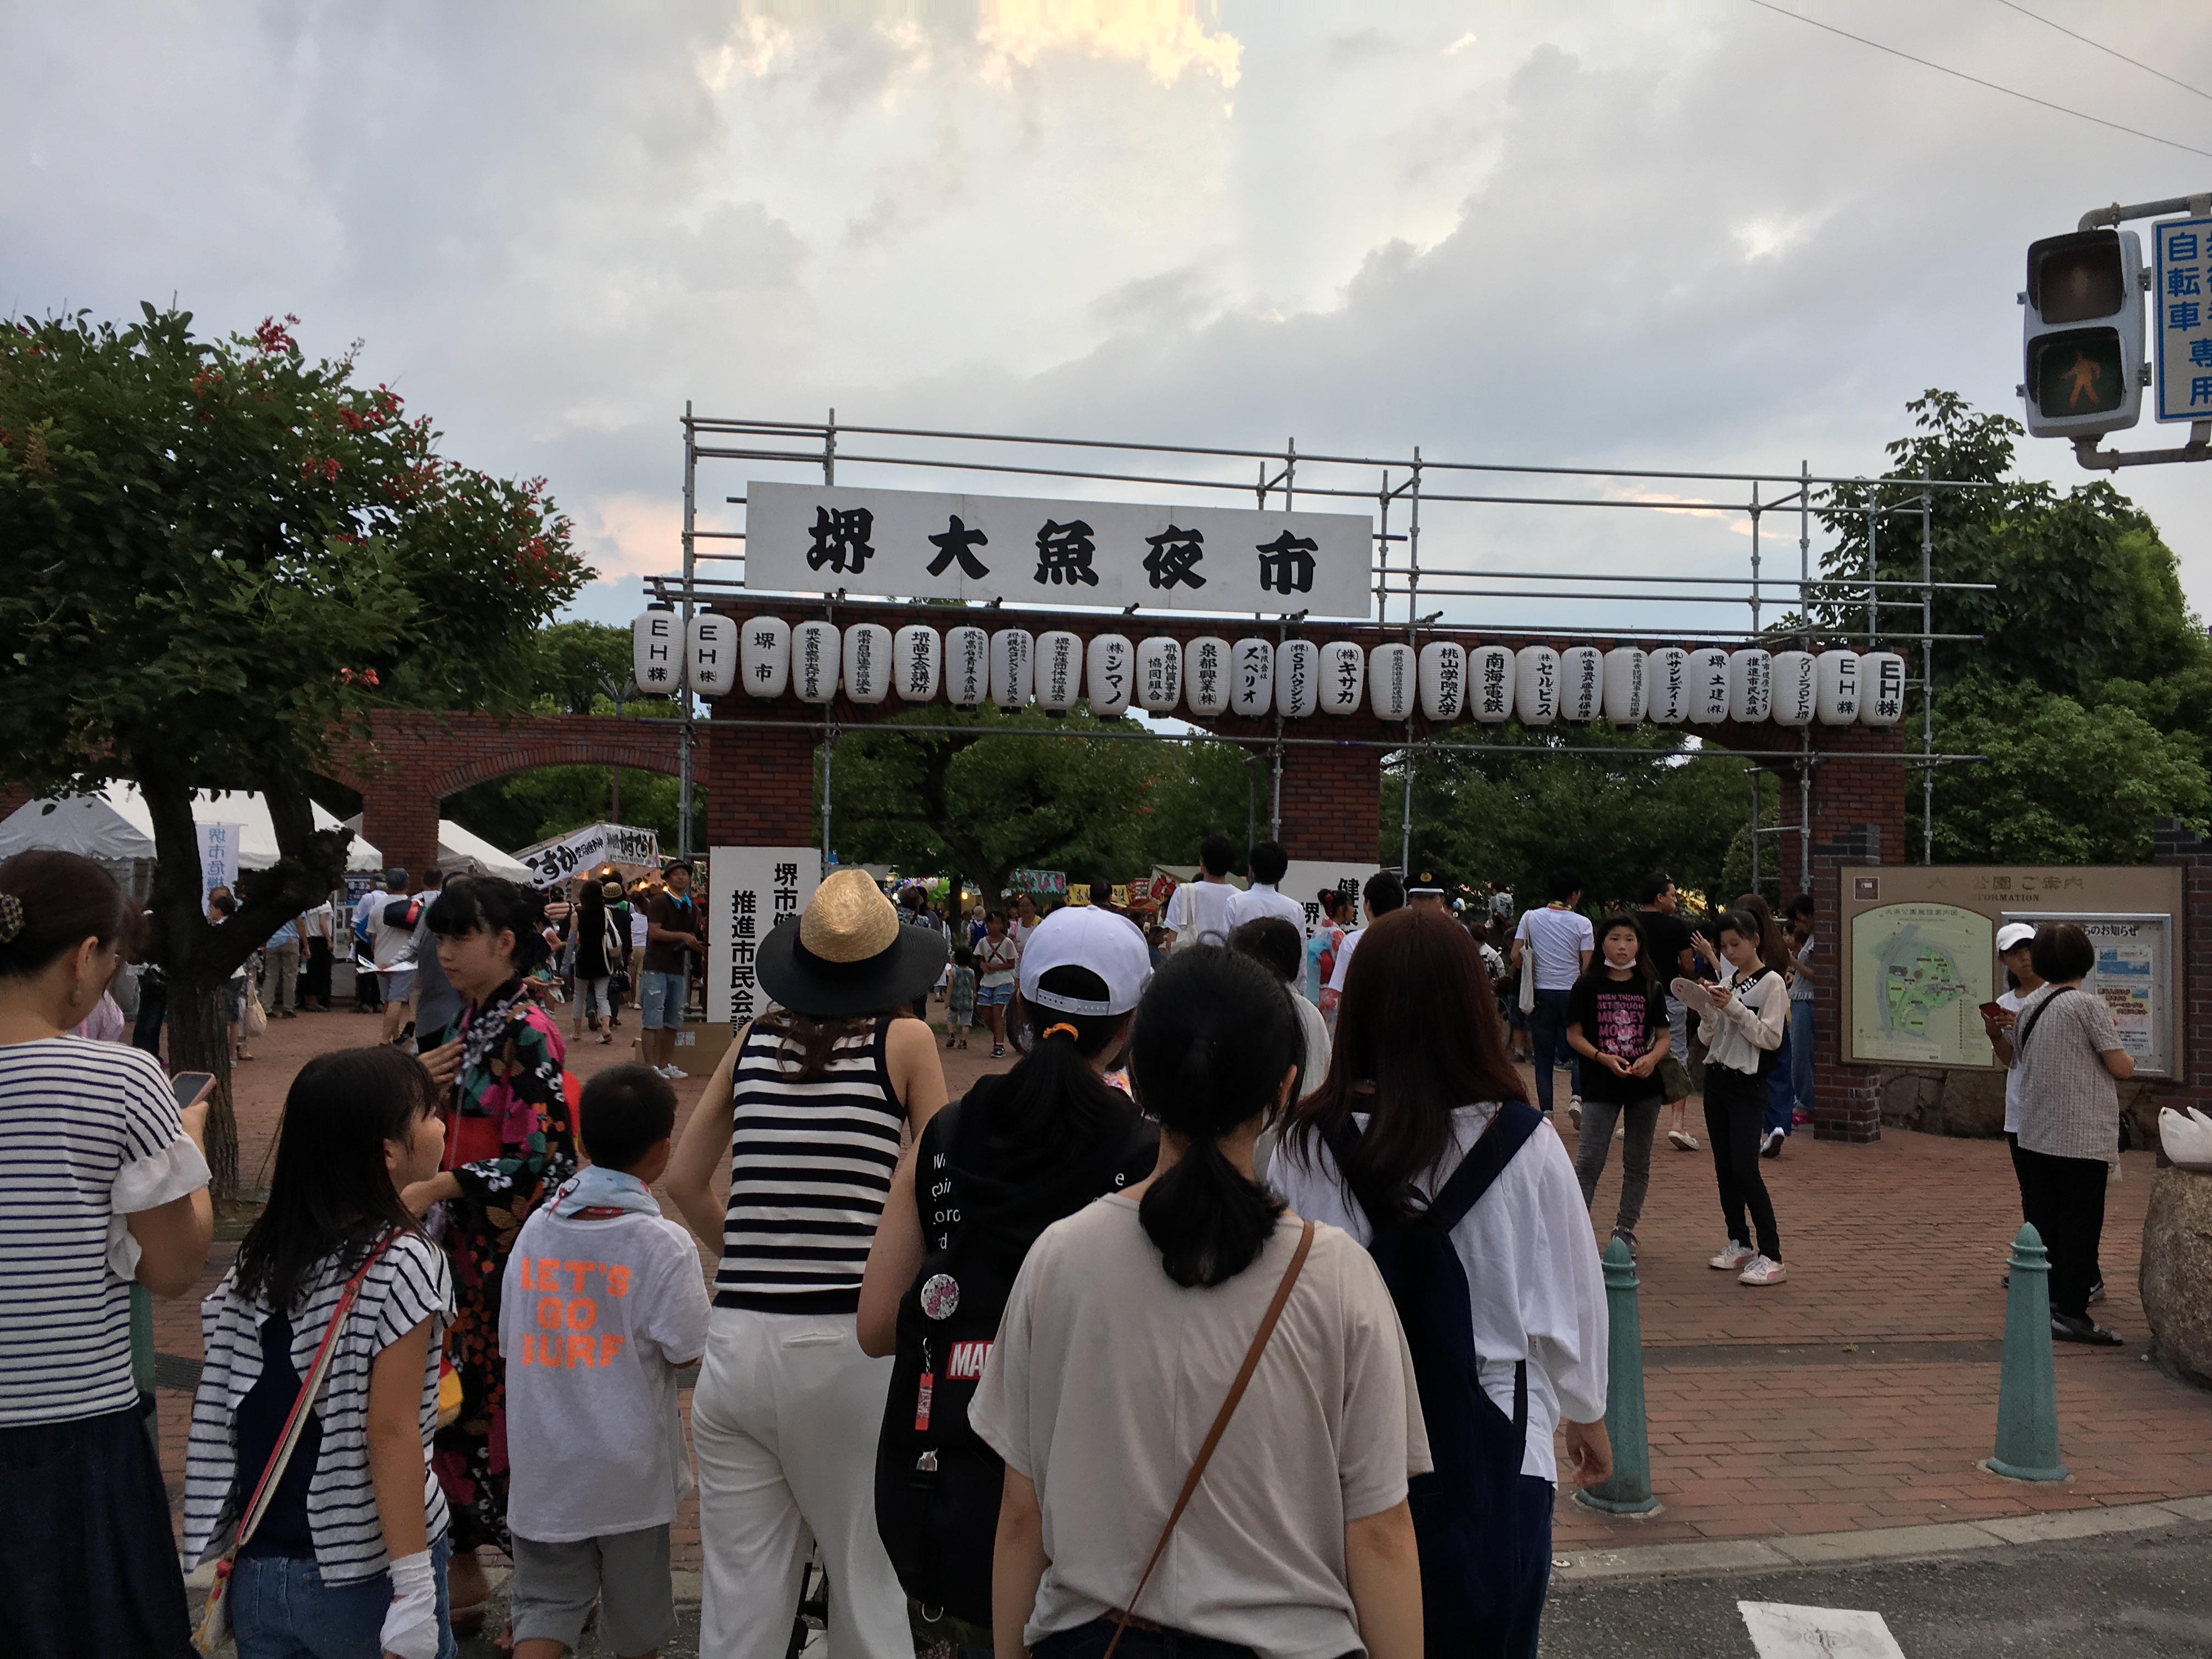 Crowds at sakai's big fish Festival